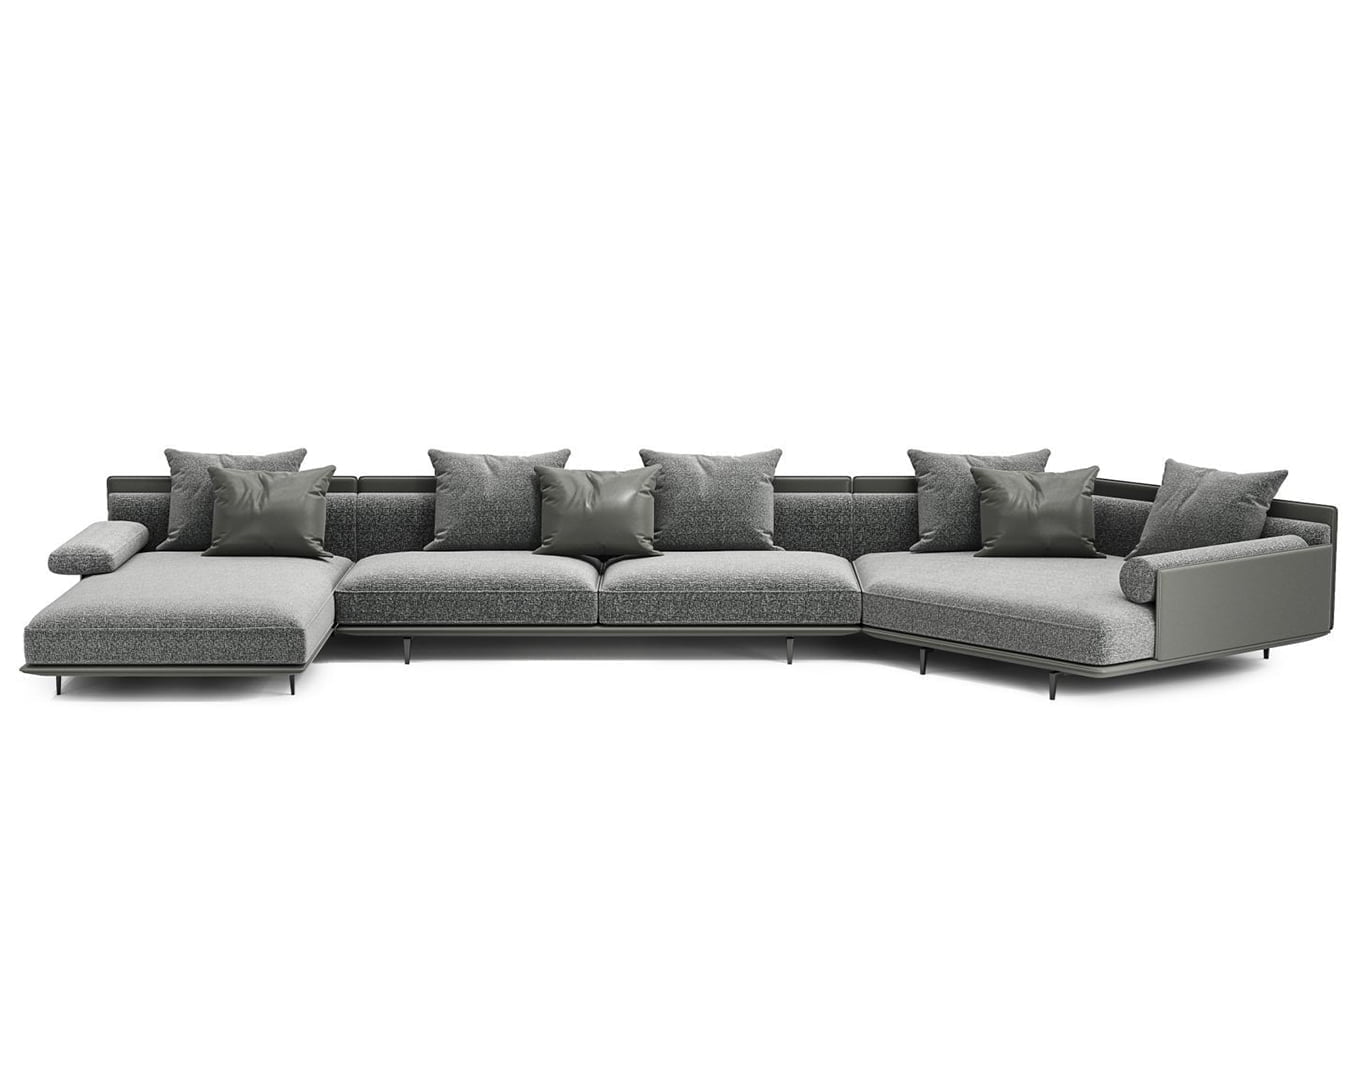 Sofa modern minimalis set grey couch